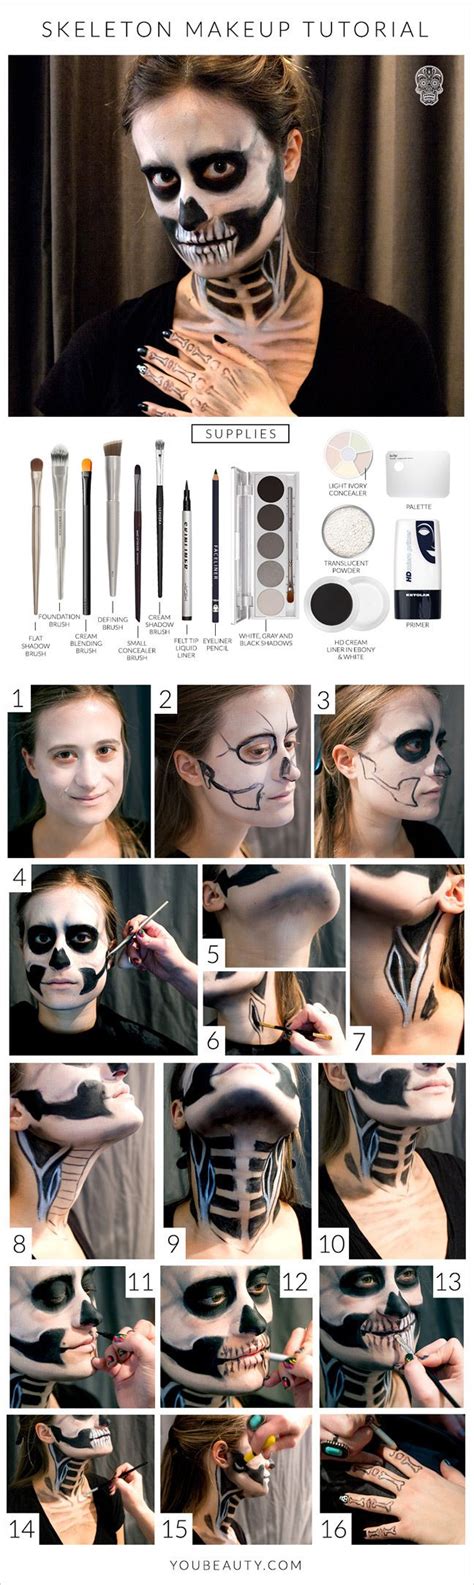 You Can Do This Halloween Skeleton Makeup Tutorial With Makeup You